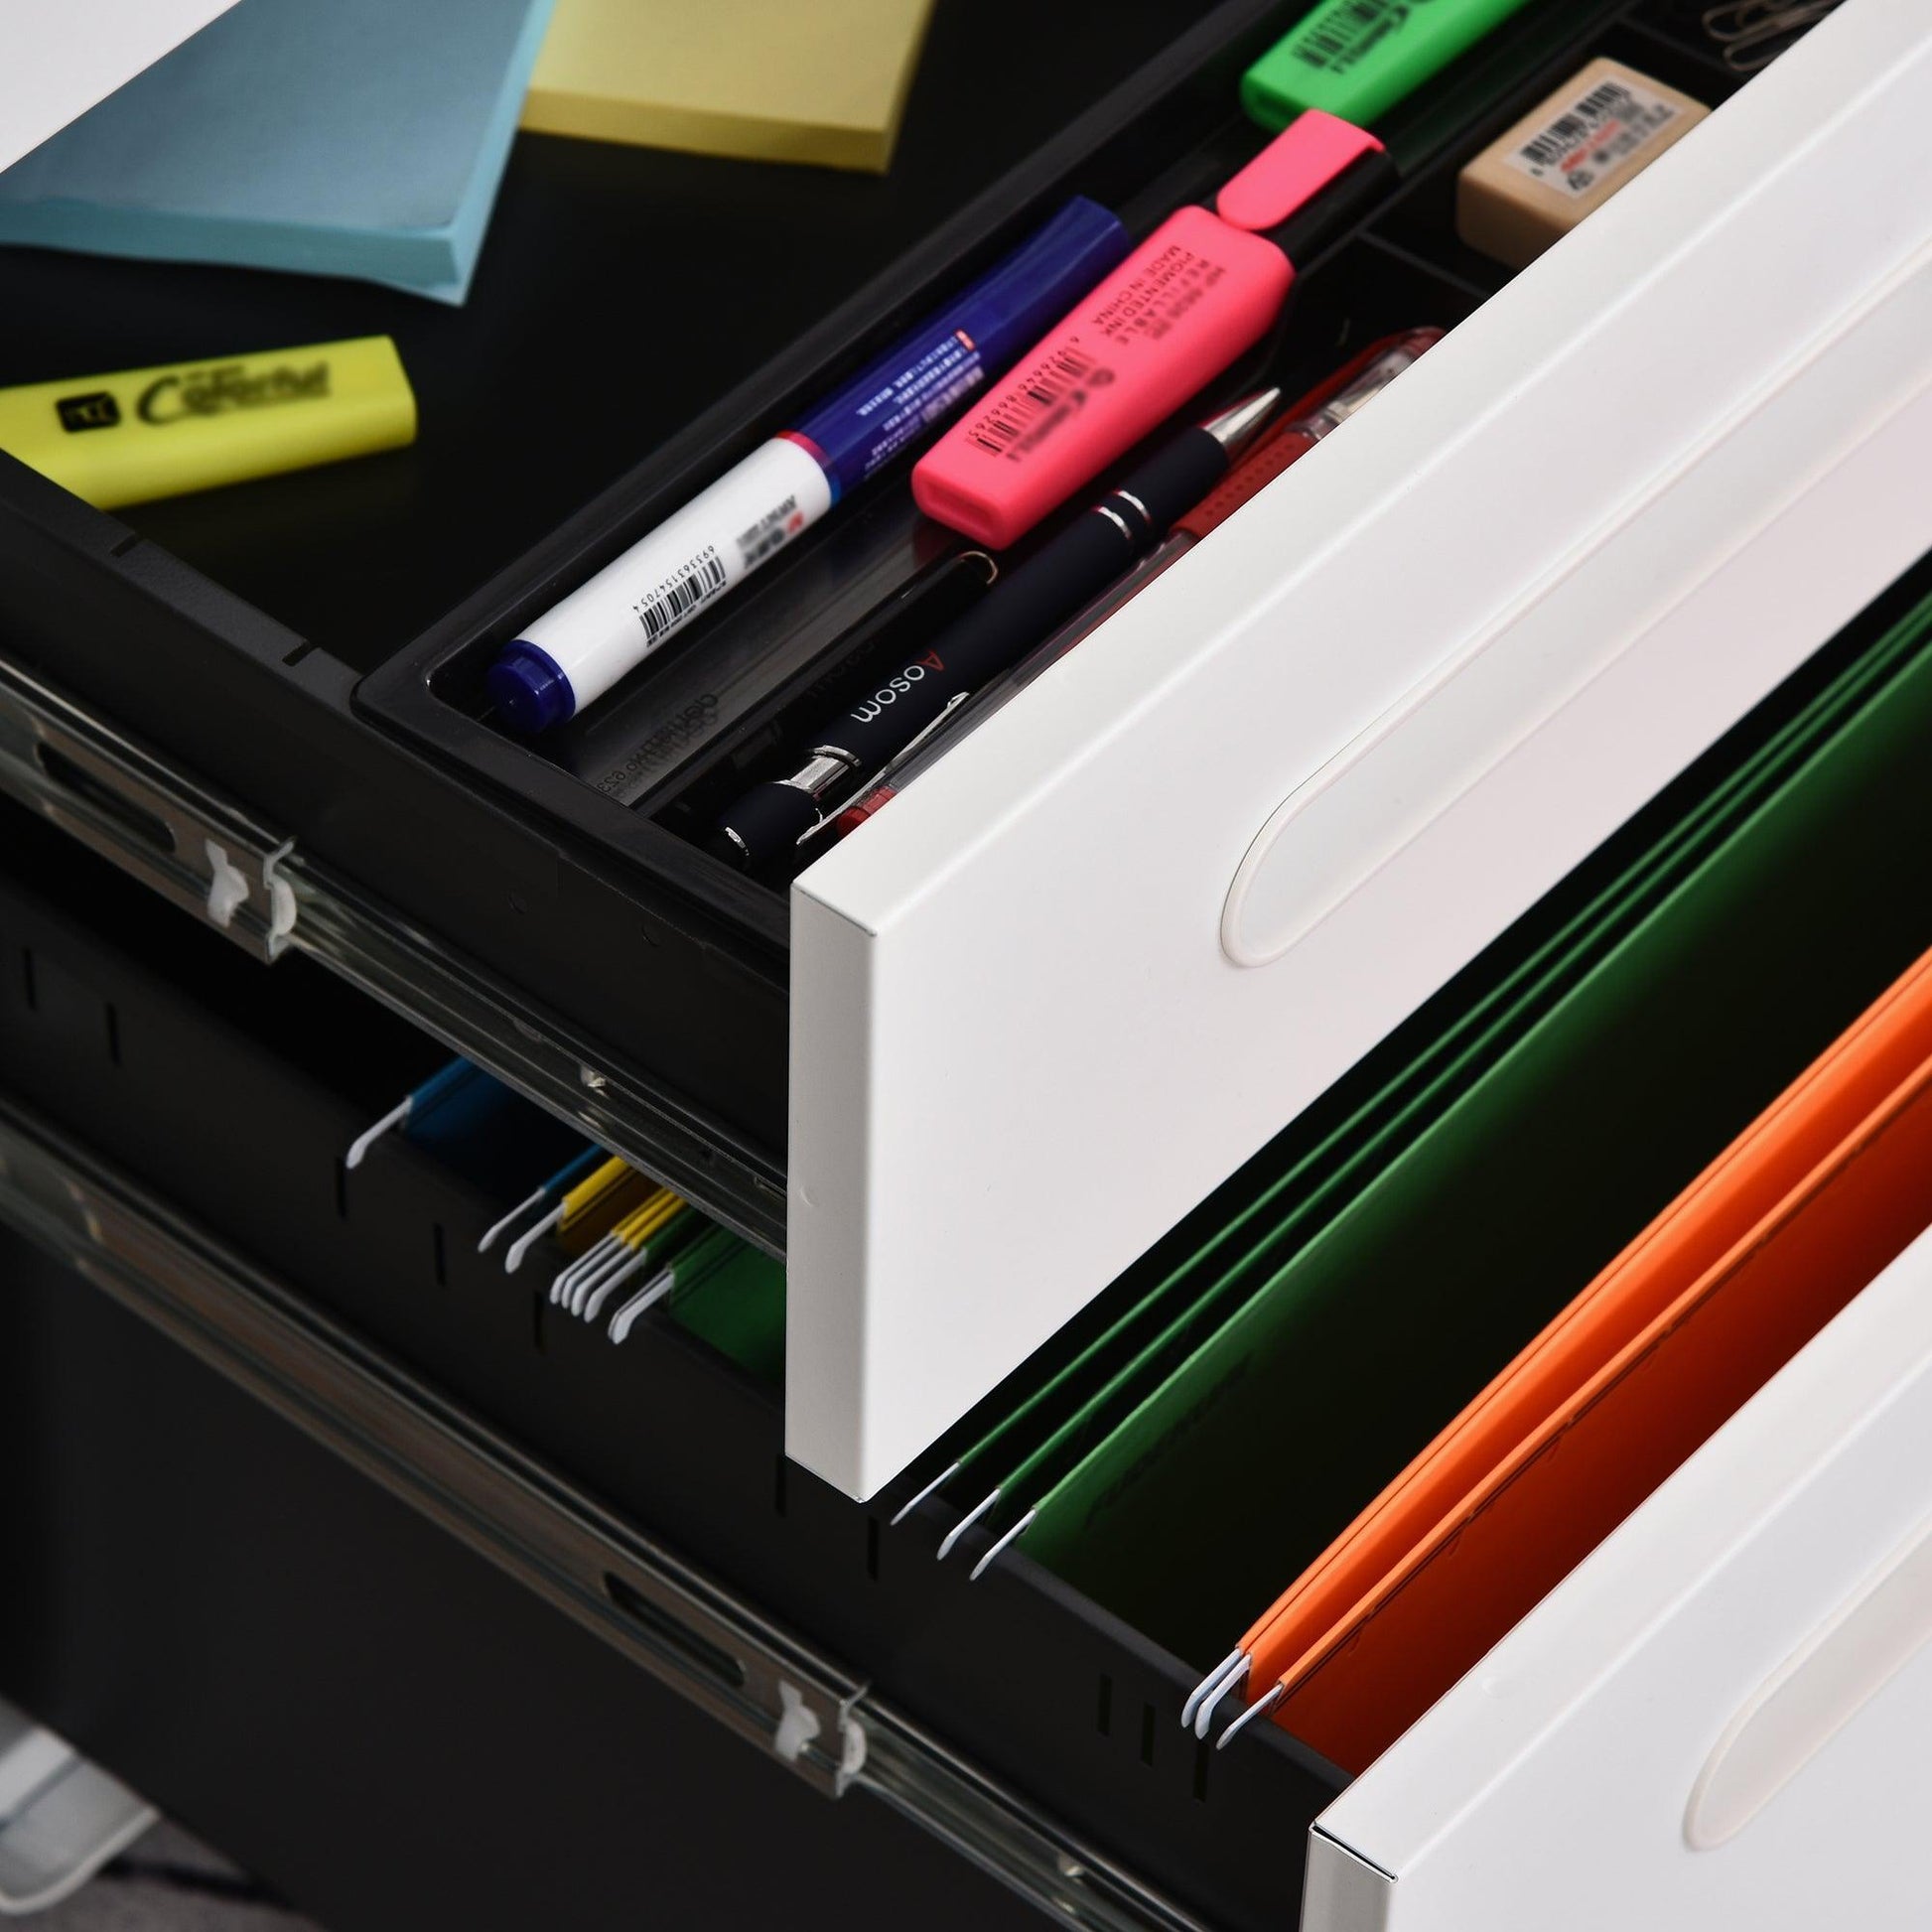 Vinsetto White 3-Drawer Mobile File Cabinet - Lockable & Assembled - ALL4U RETAILER LTD